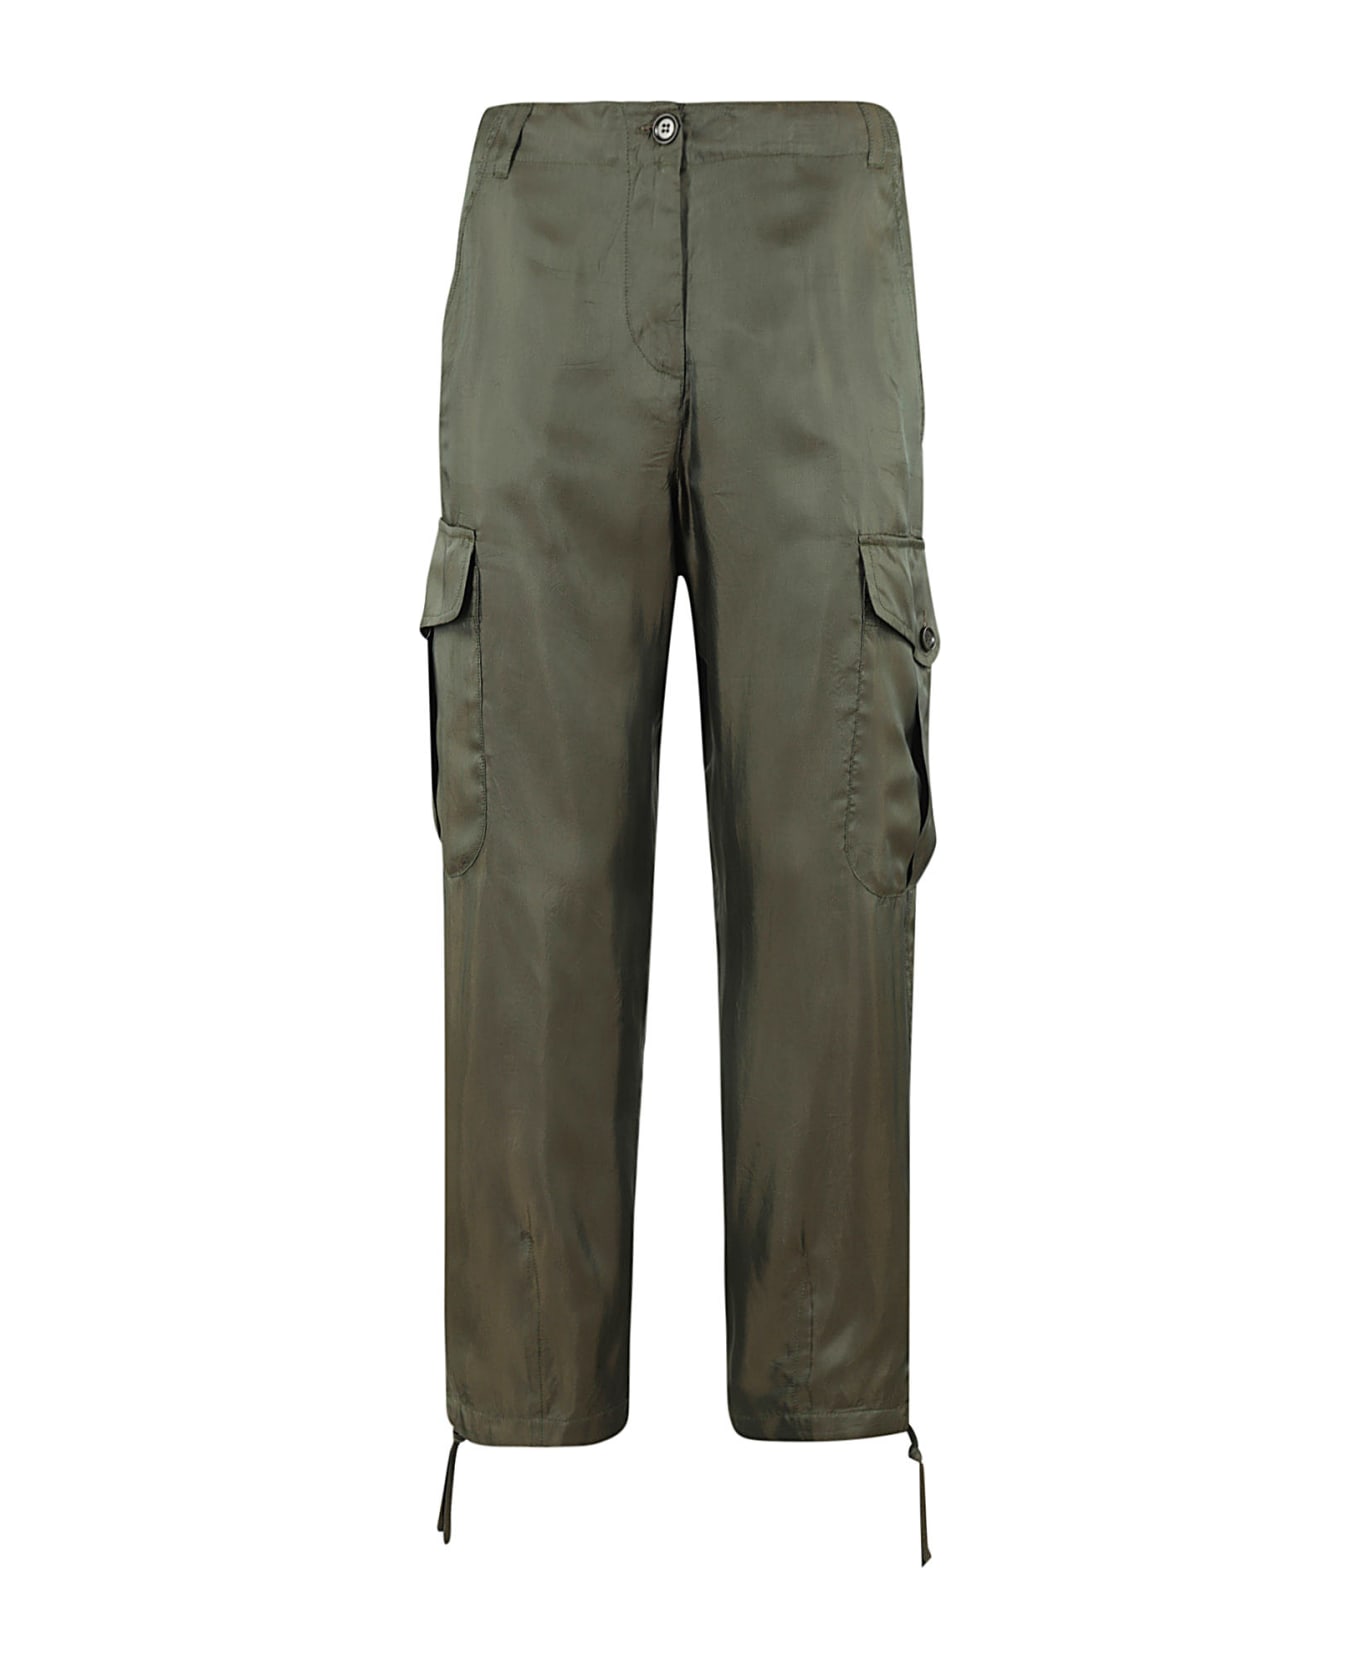 Aspesi Pantalone Mod 0169 - Militare  ボトムス